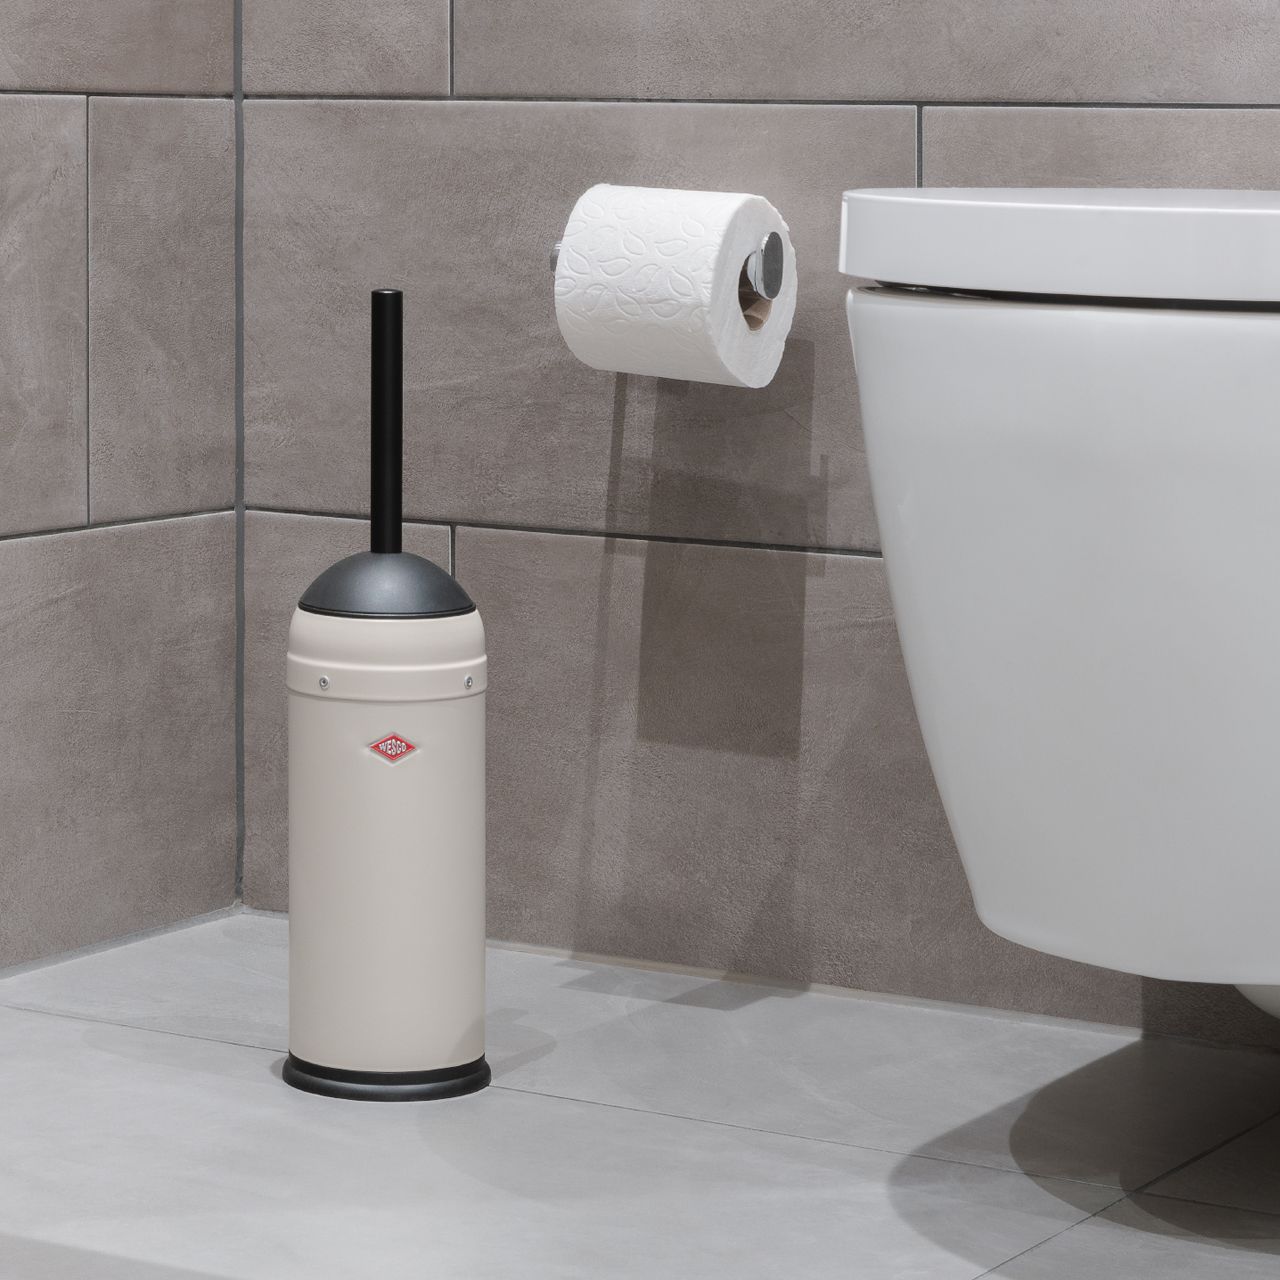 WESCO - Toilettenbürste - cool grey matt